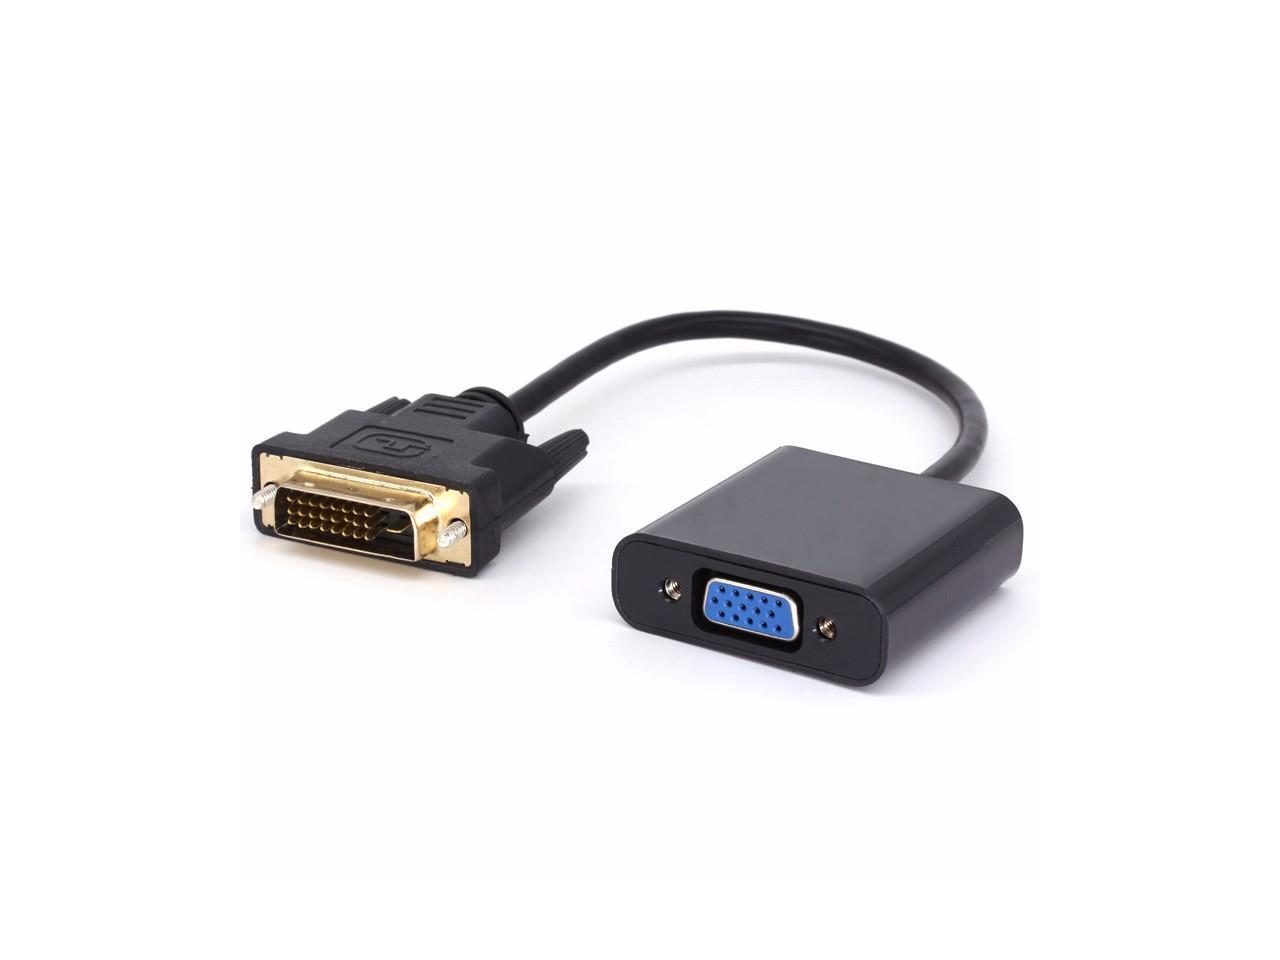 Lot Premium Active DVI 24+5 Male to VGA Male PC Monitor Cable Adapter Converter